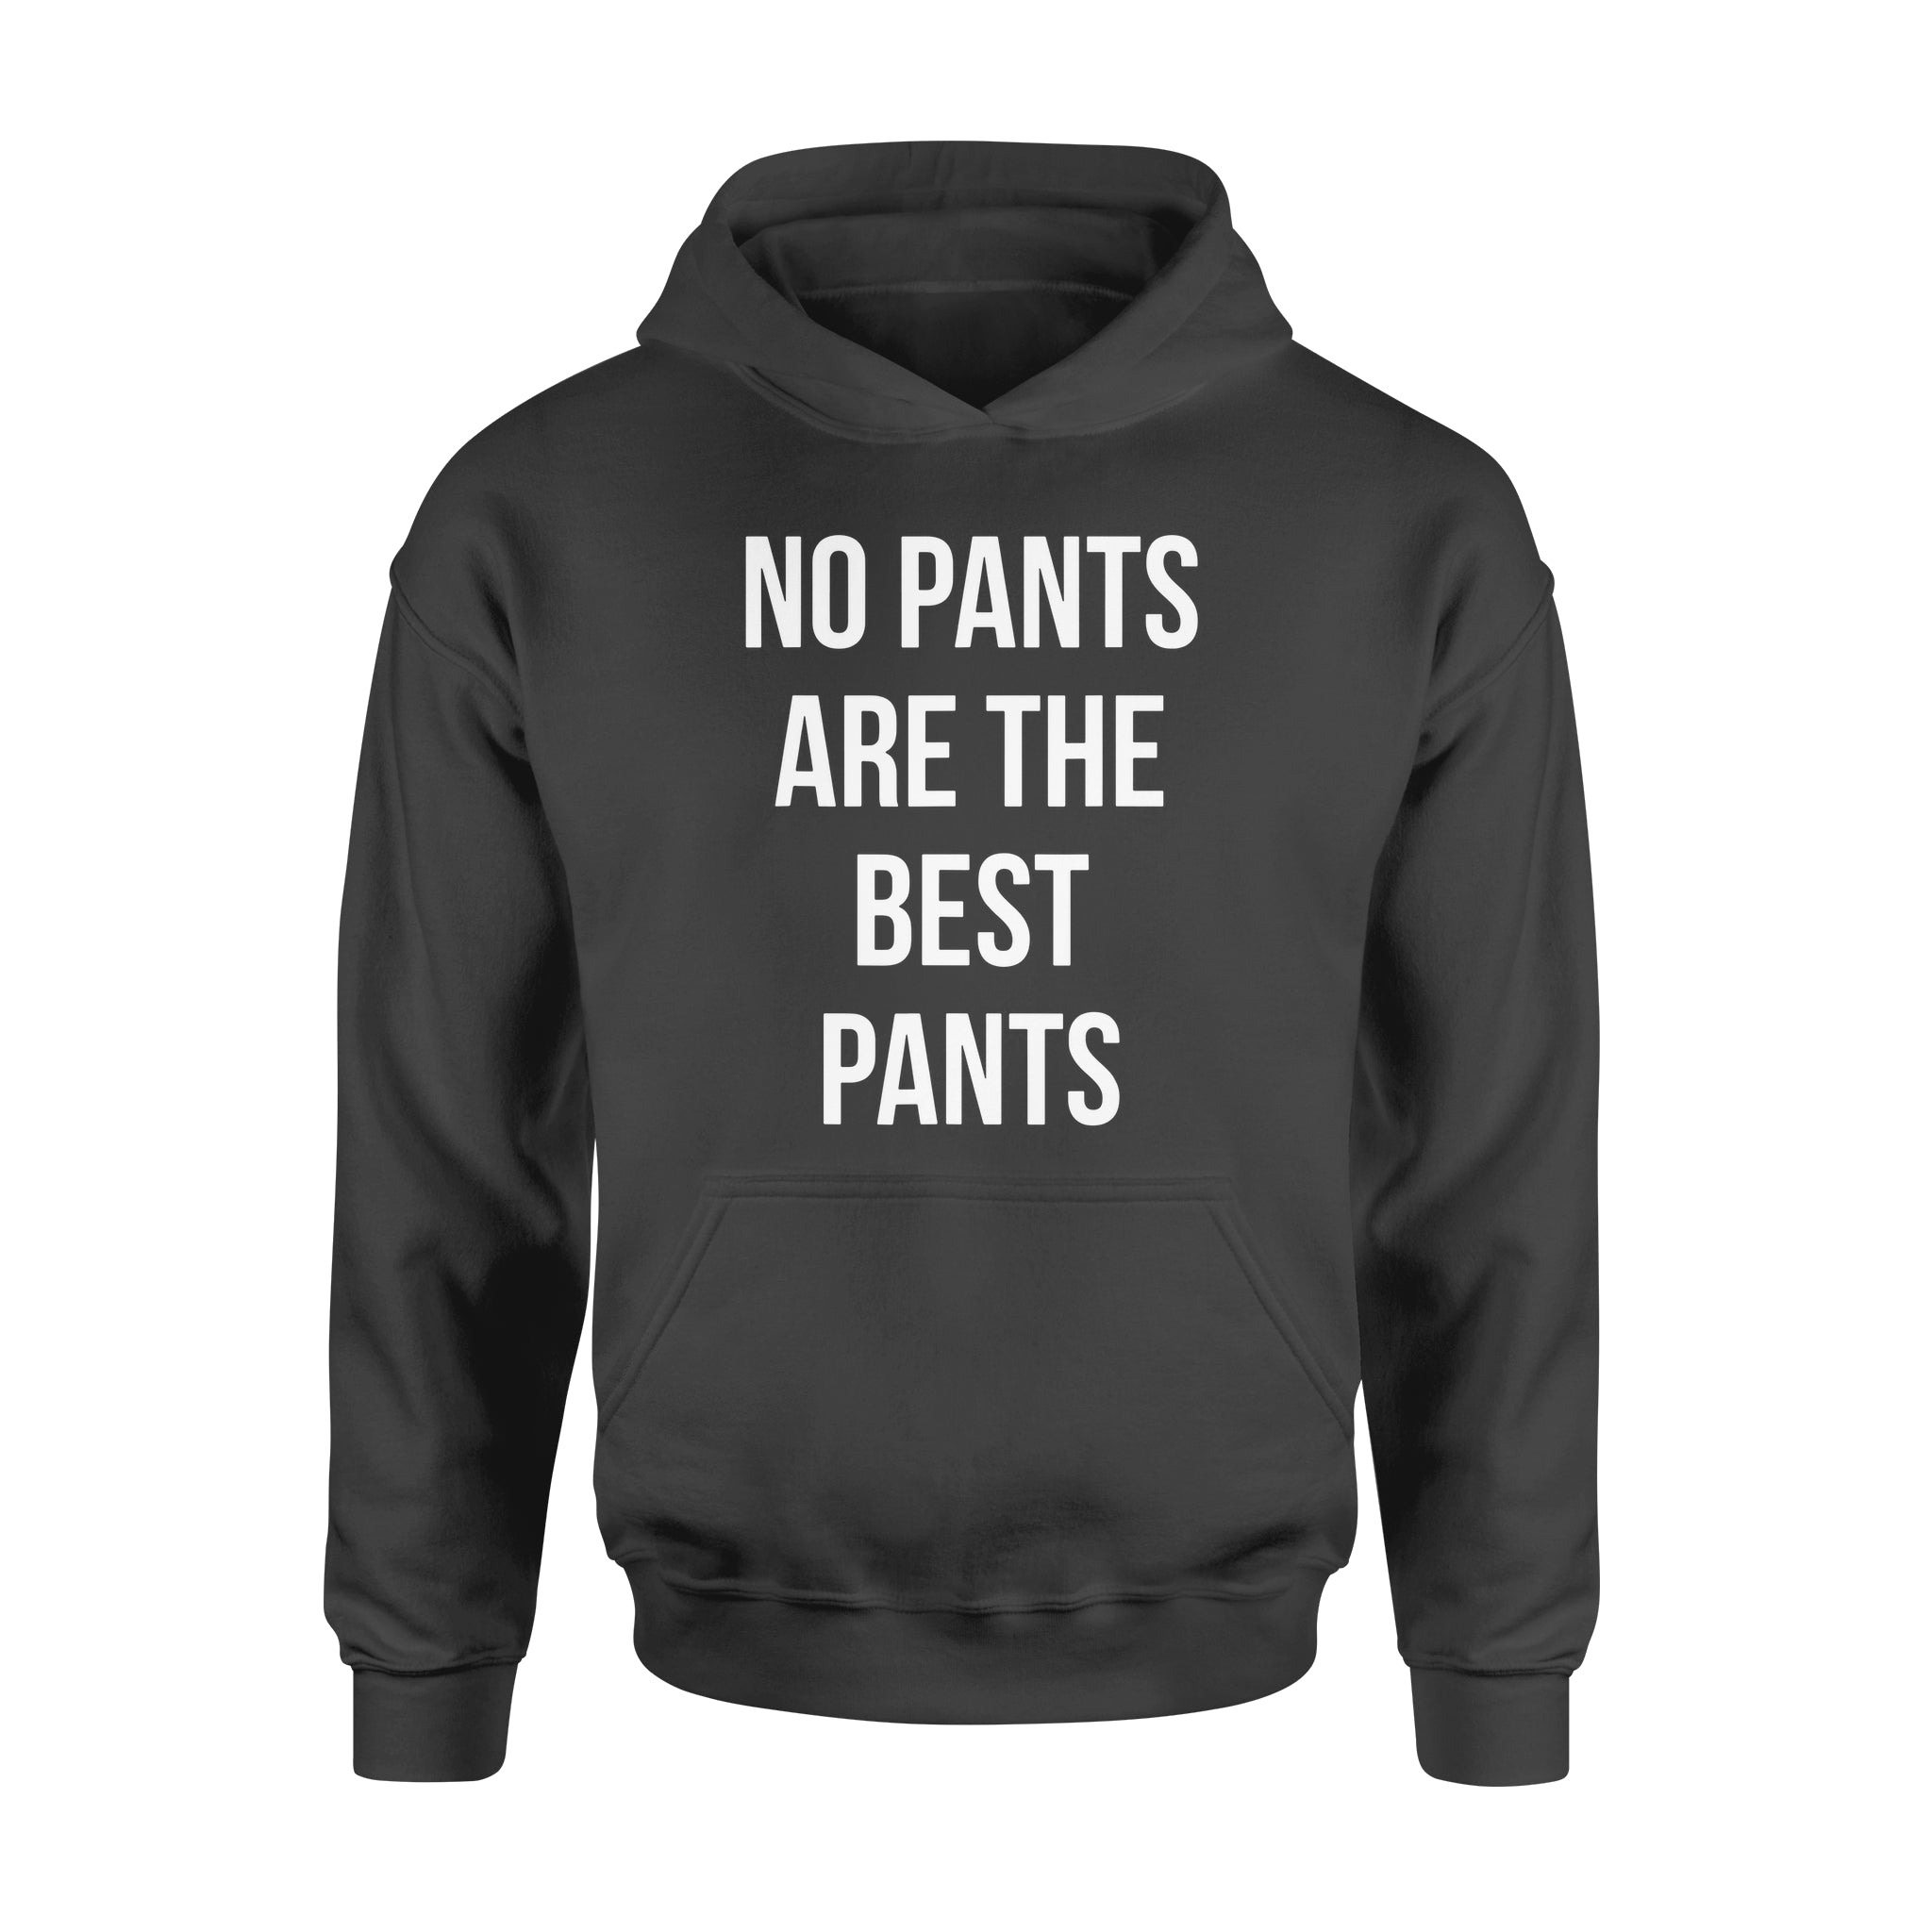 No Pants Are The Best Pants - Standard Hoodie